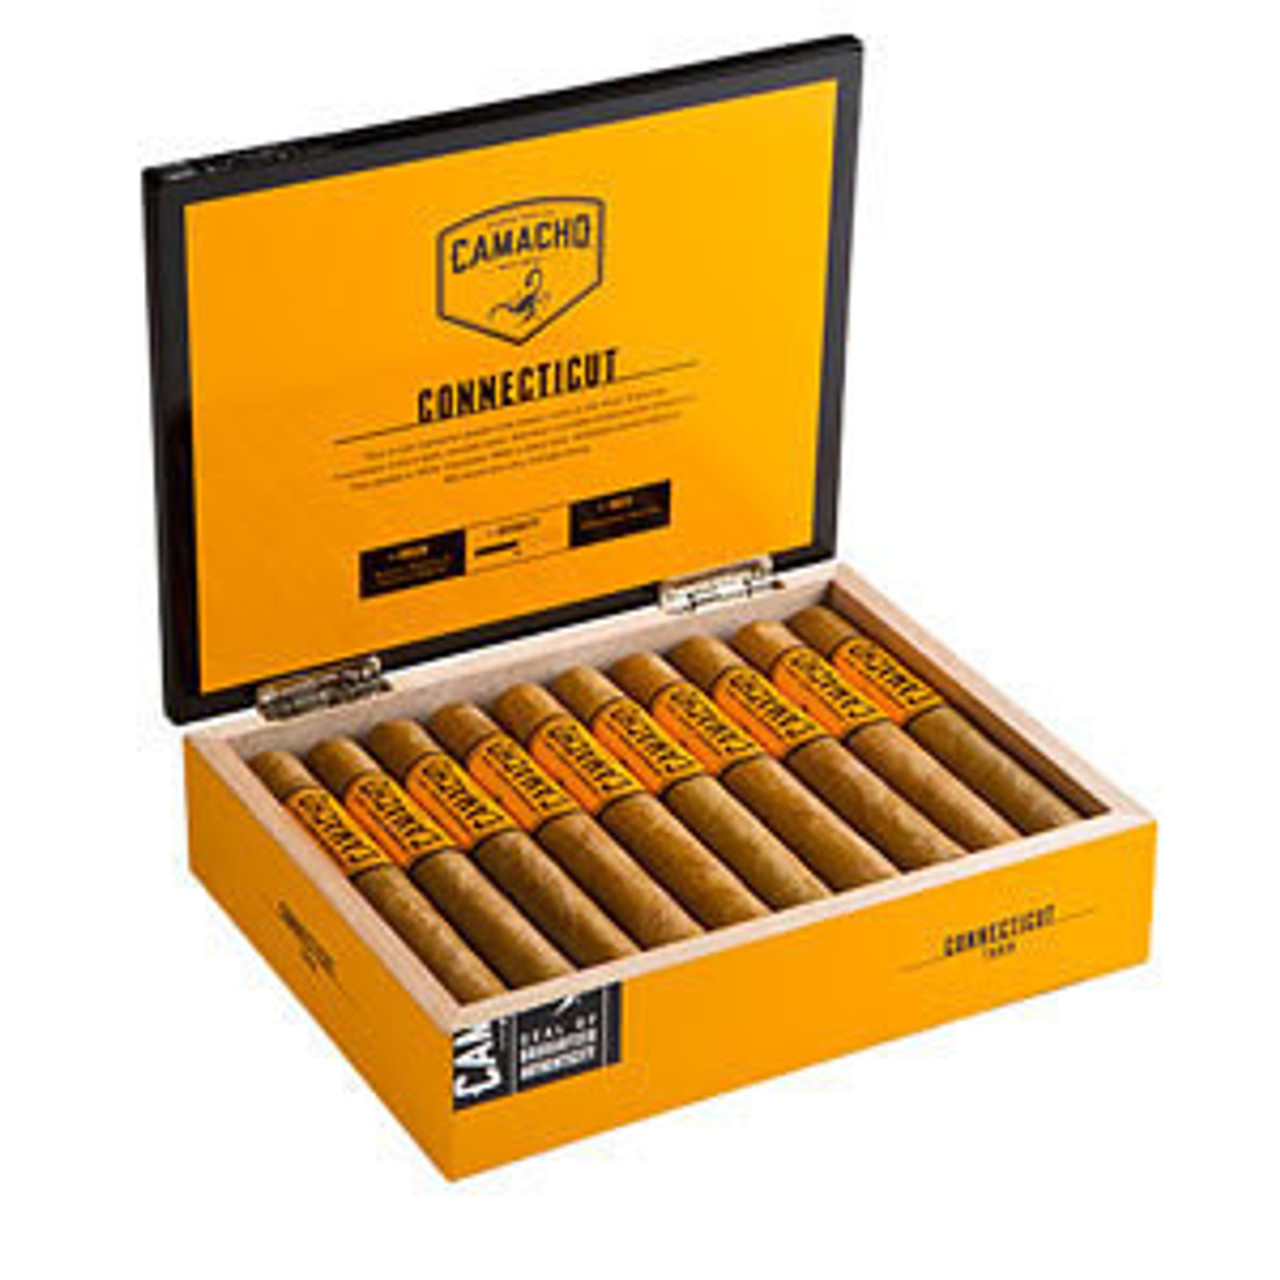 Camacho Connecticut Robusto Tubo Cigars - 5 x 50 (Box of 20) Open